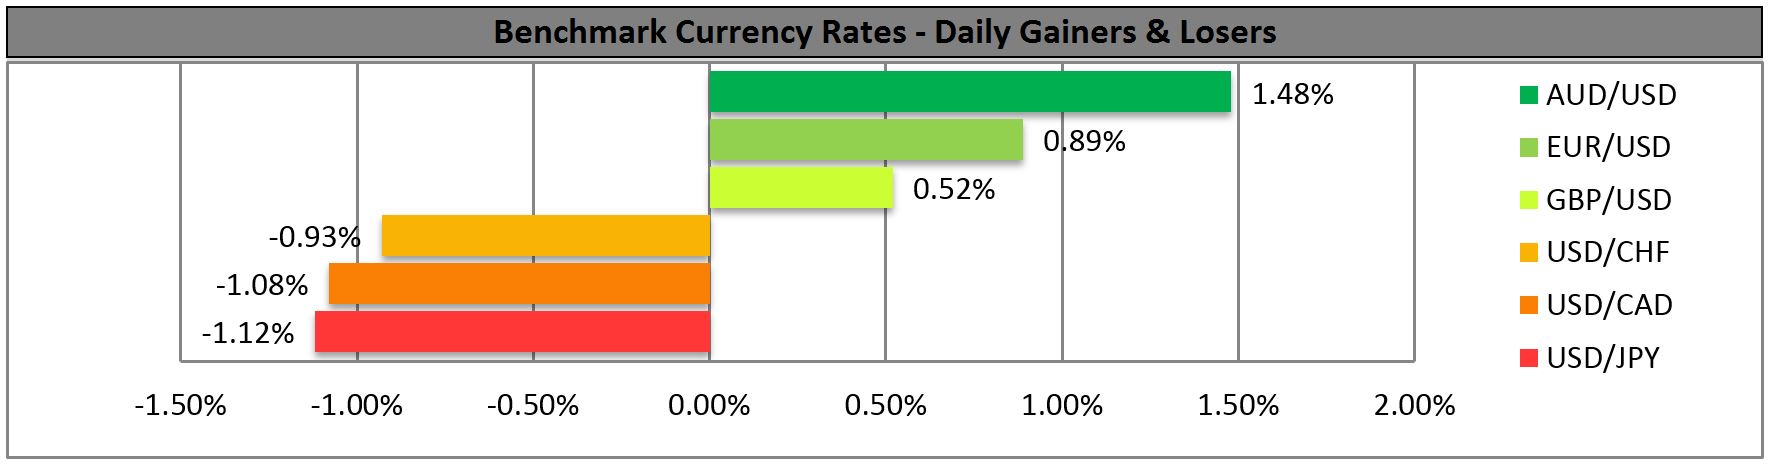 FX Rates